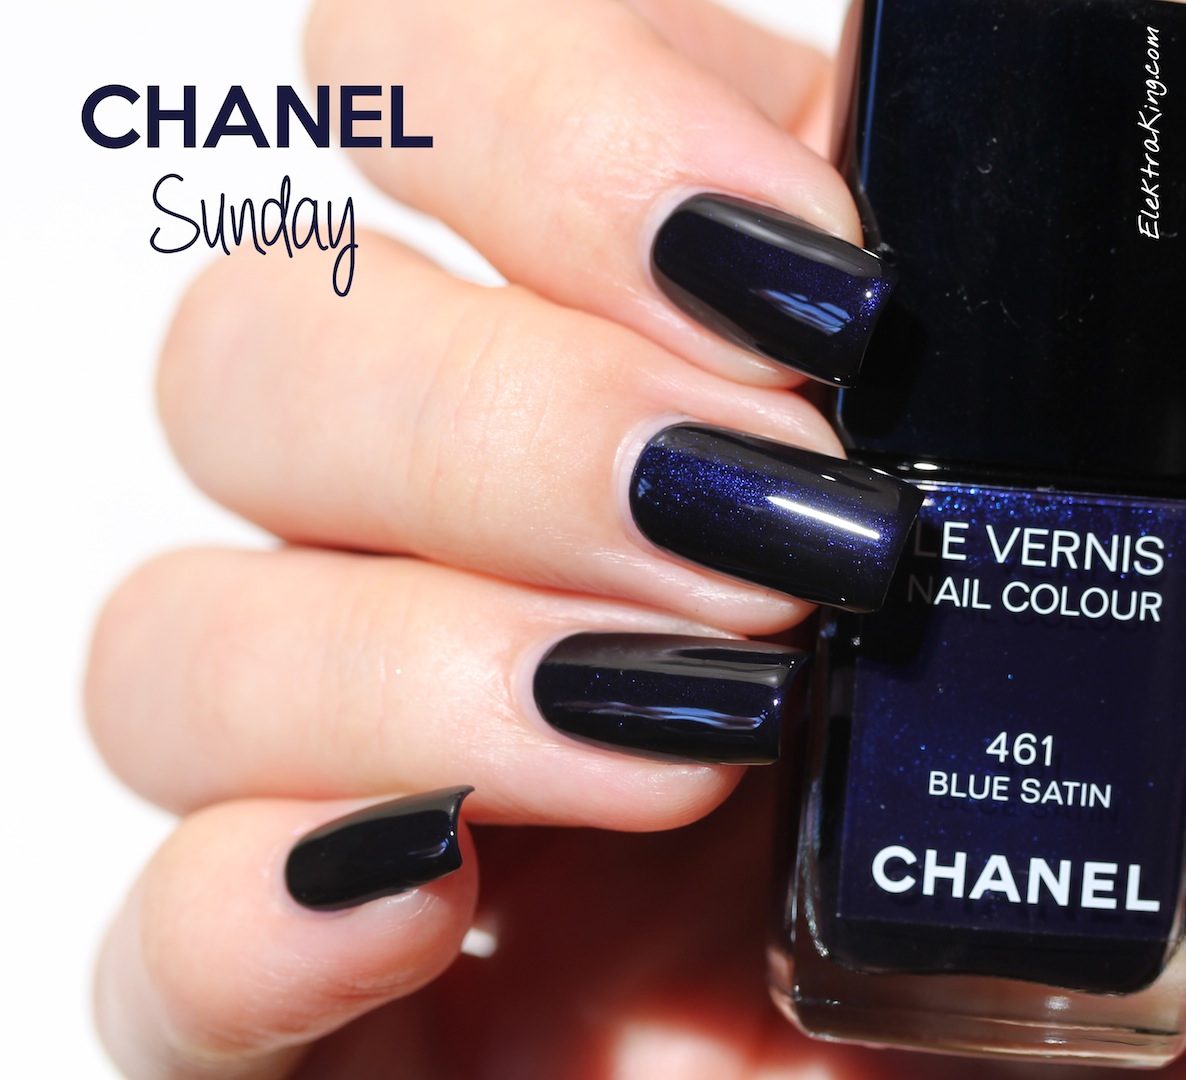 Chanel Sunday ✿ Blue Satin